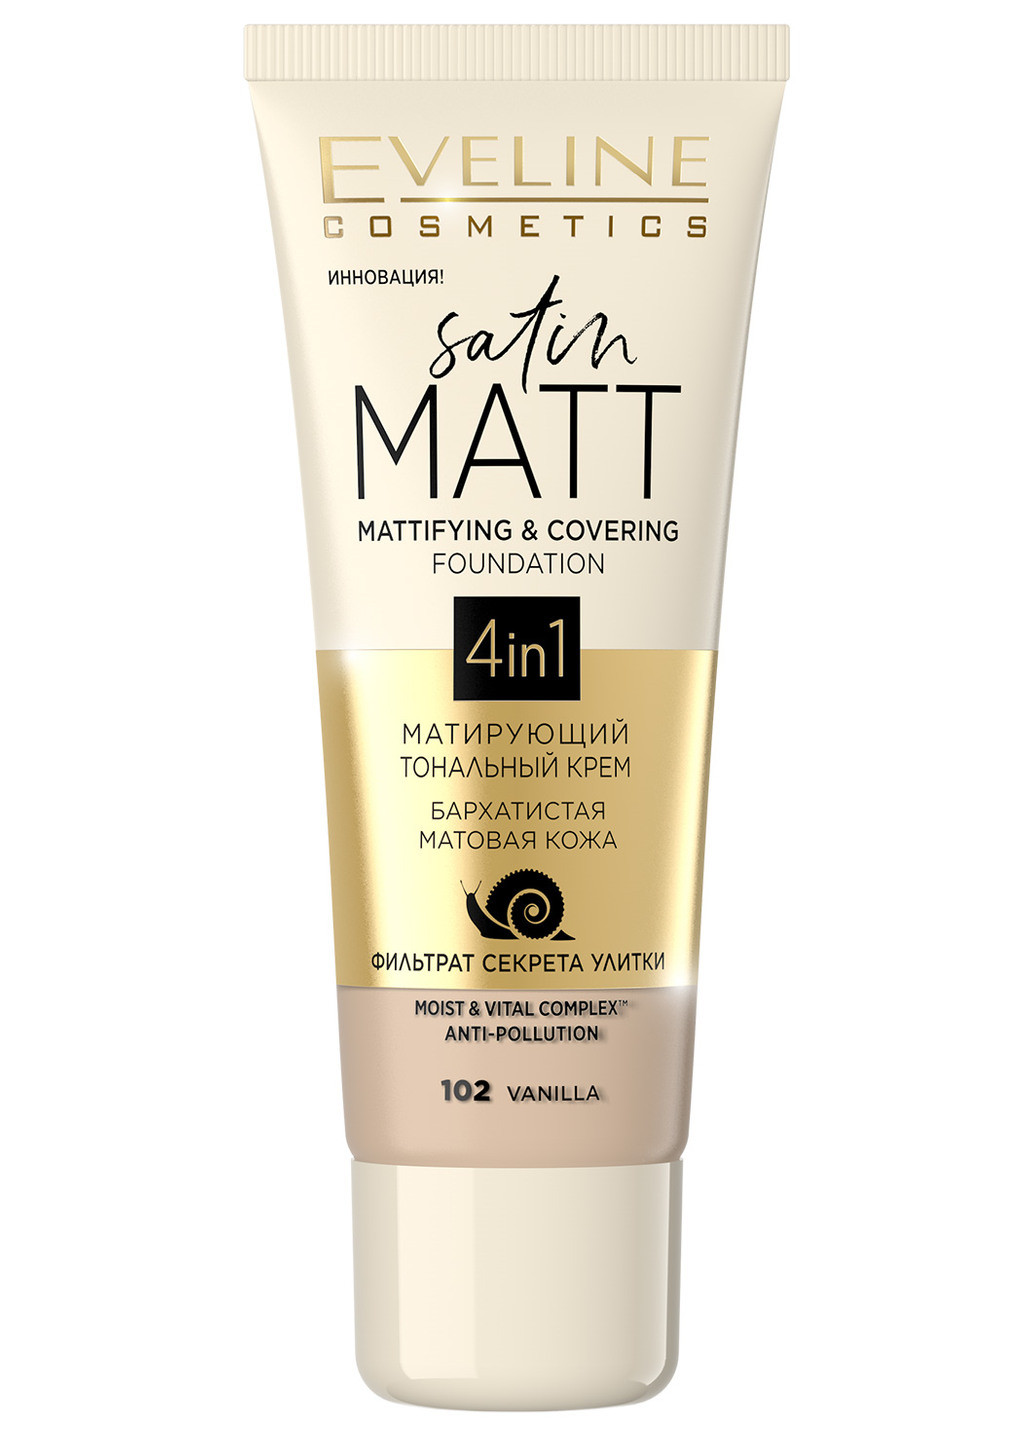 Матуючий тональний крем для обличчя Satin Matt Mattifying & Covering Foundation 4in1 №102 Vanilla Eveline Cosmetics (190885682)